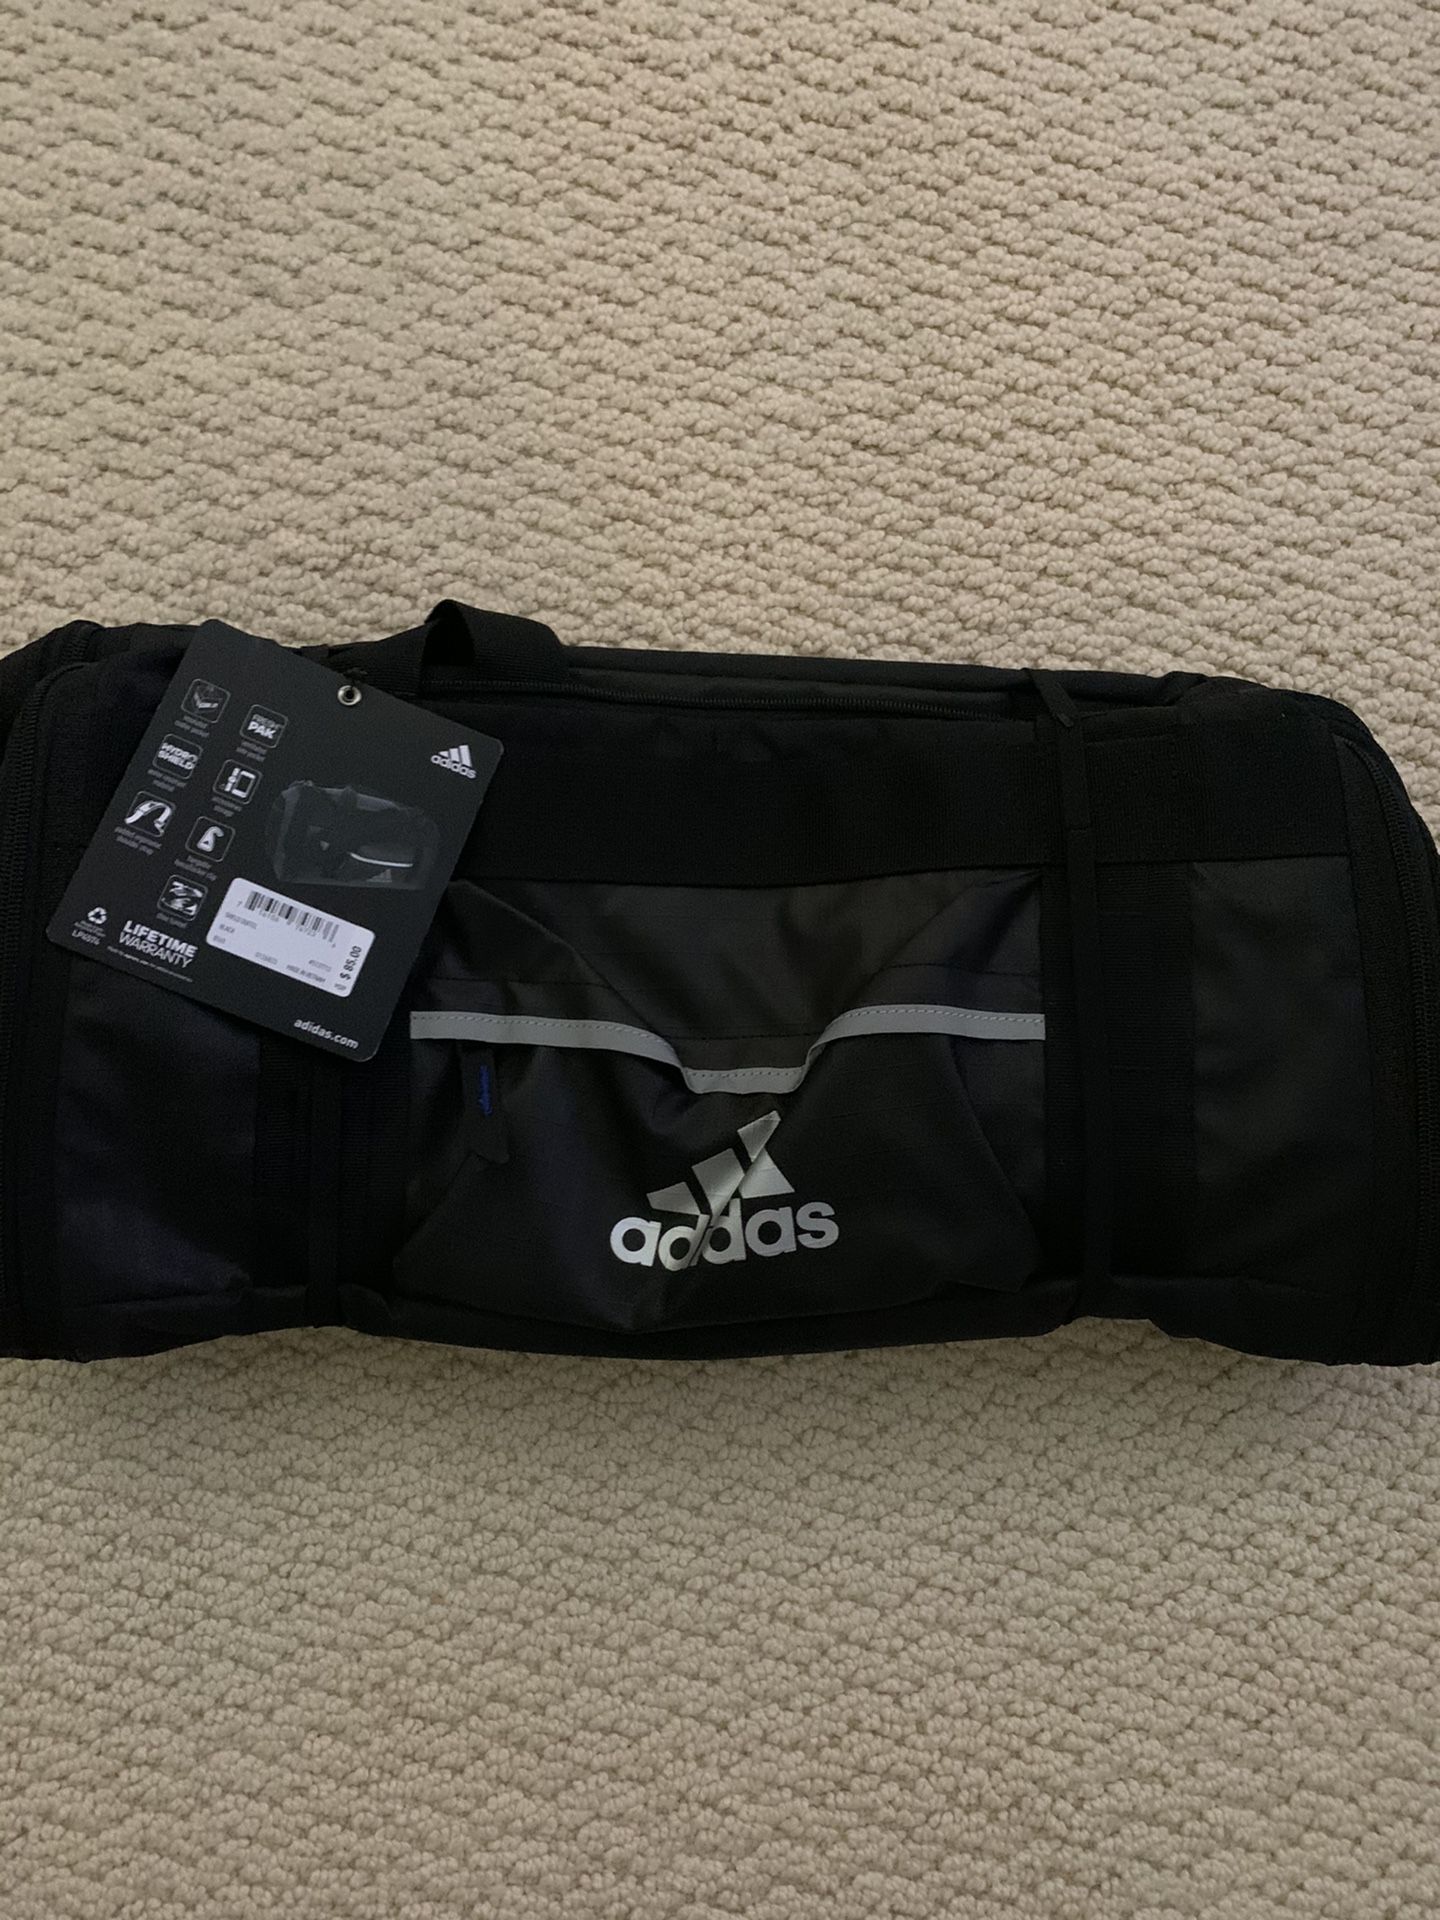 Adidas duffle Bag